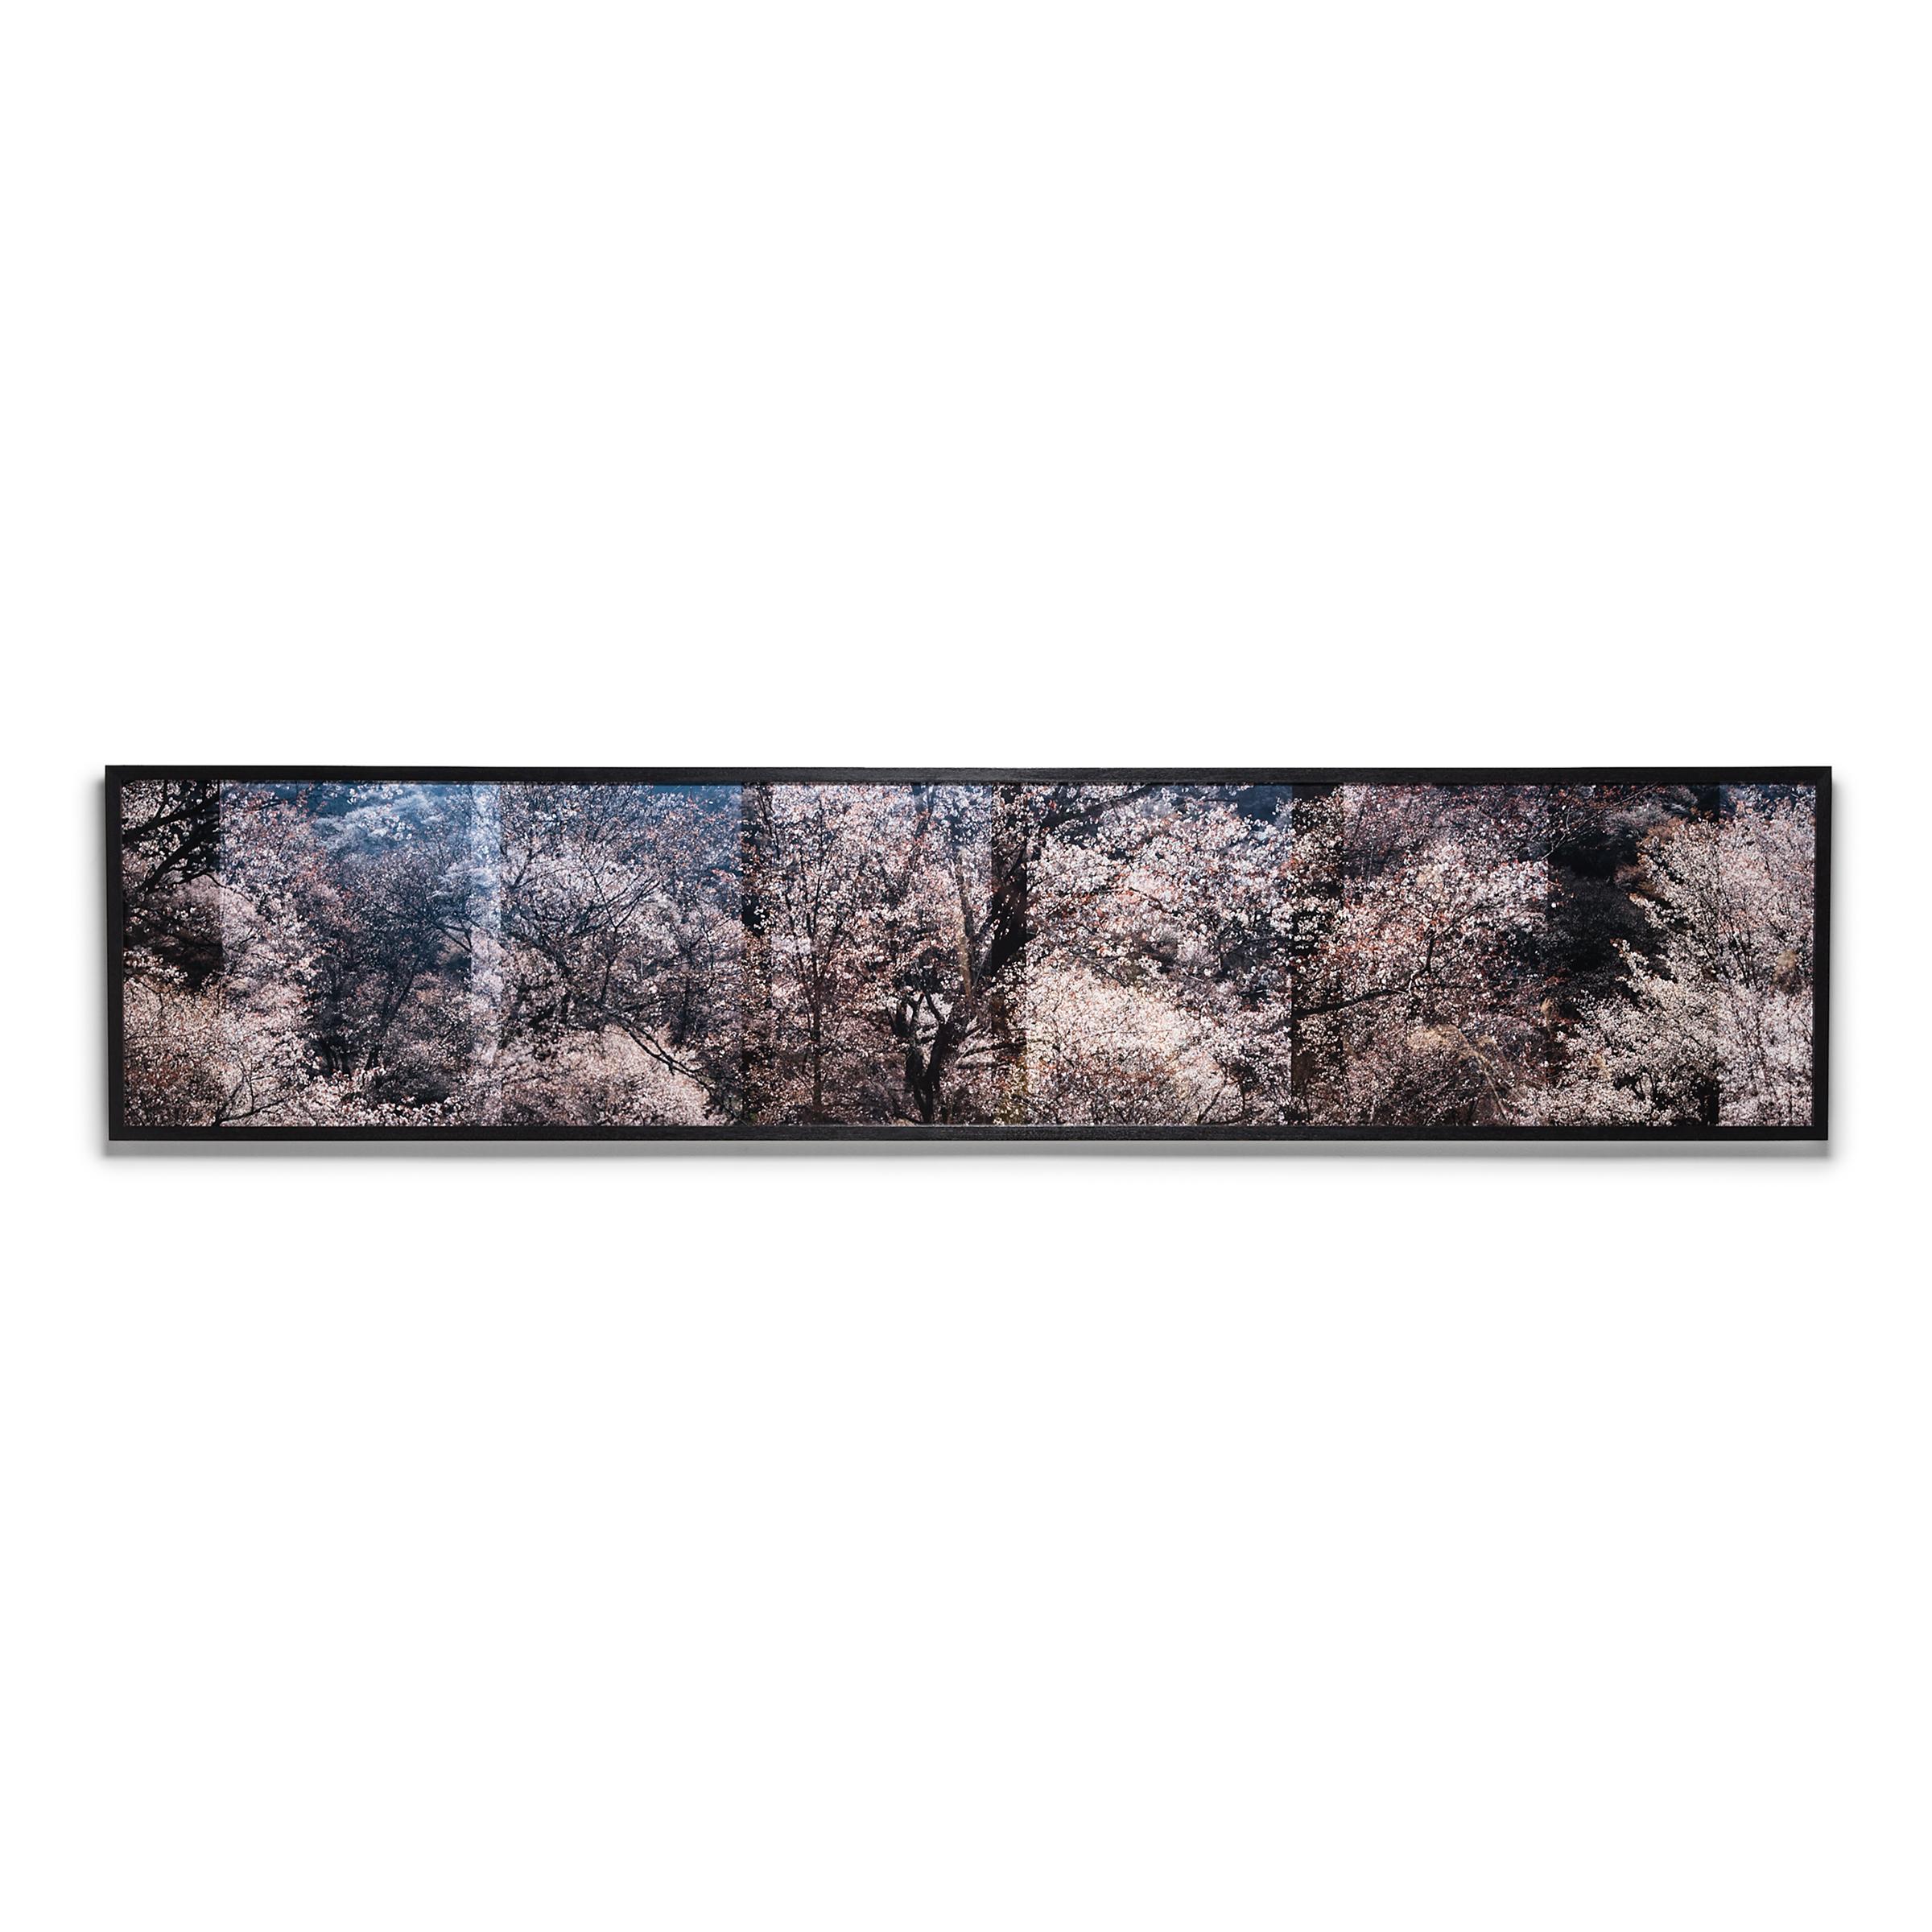 Doug Fogelson Landscape Photograph - Sakura 11